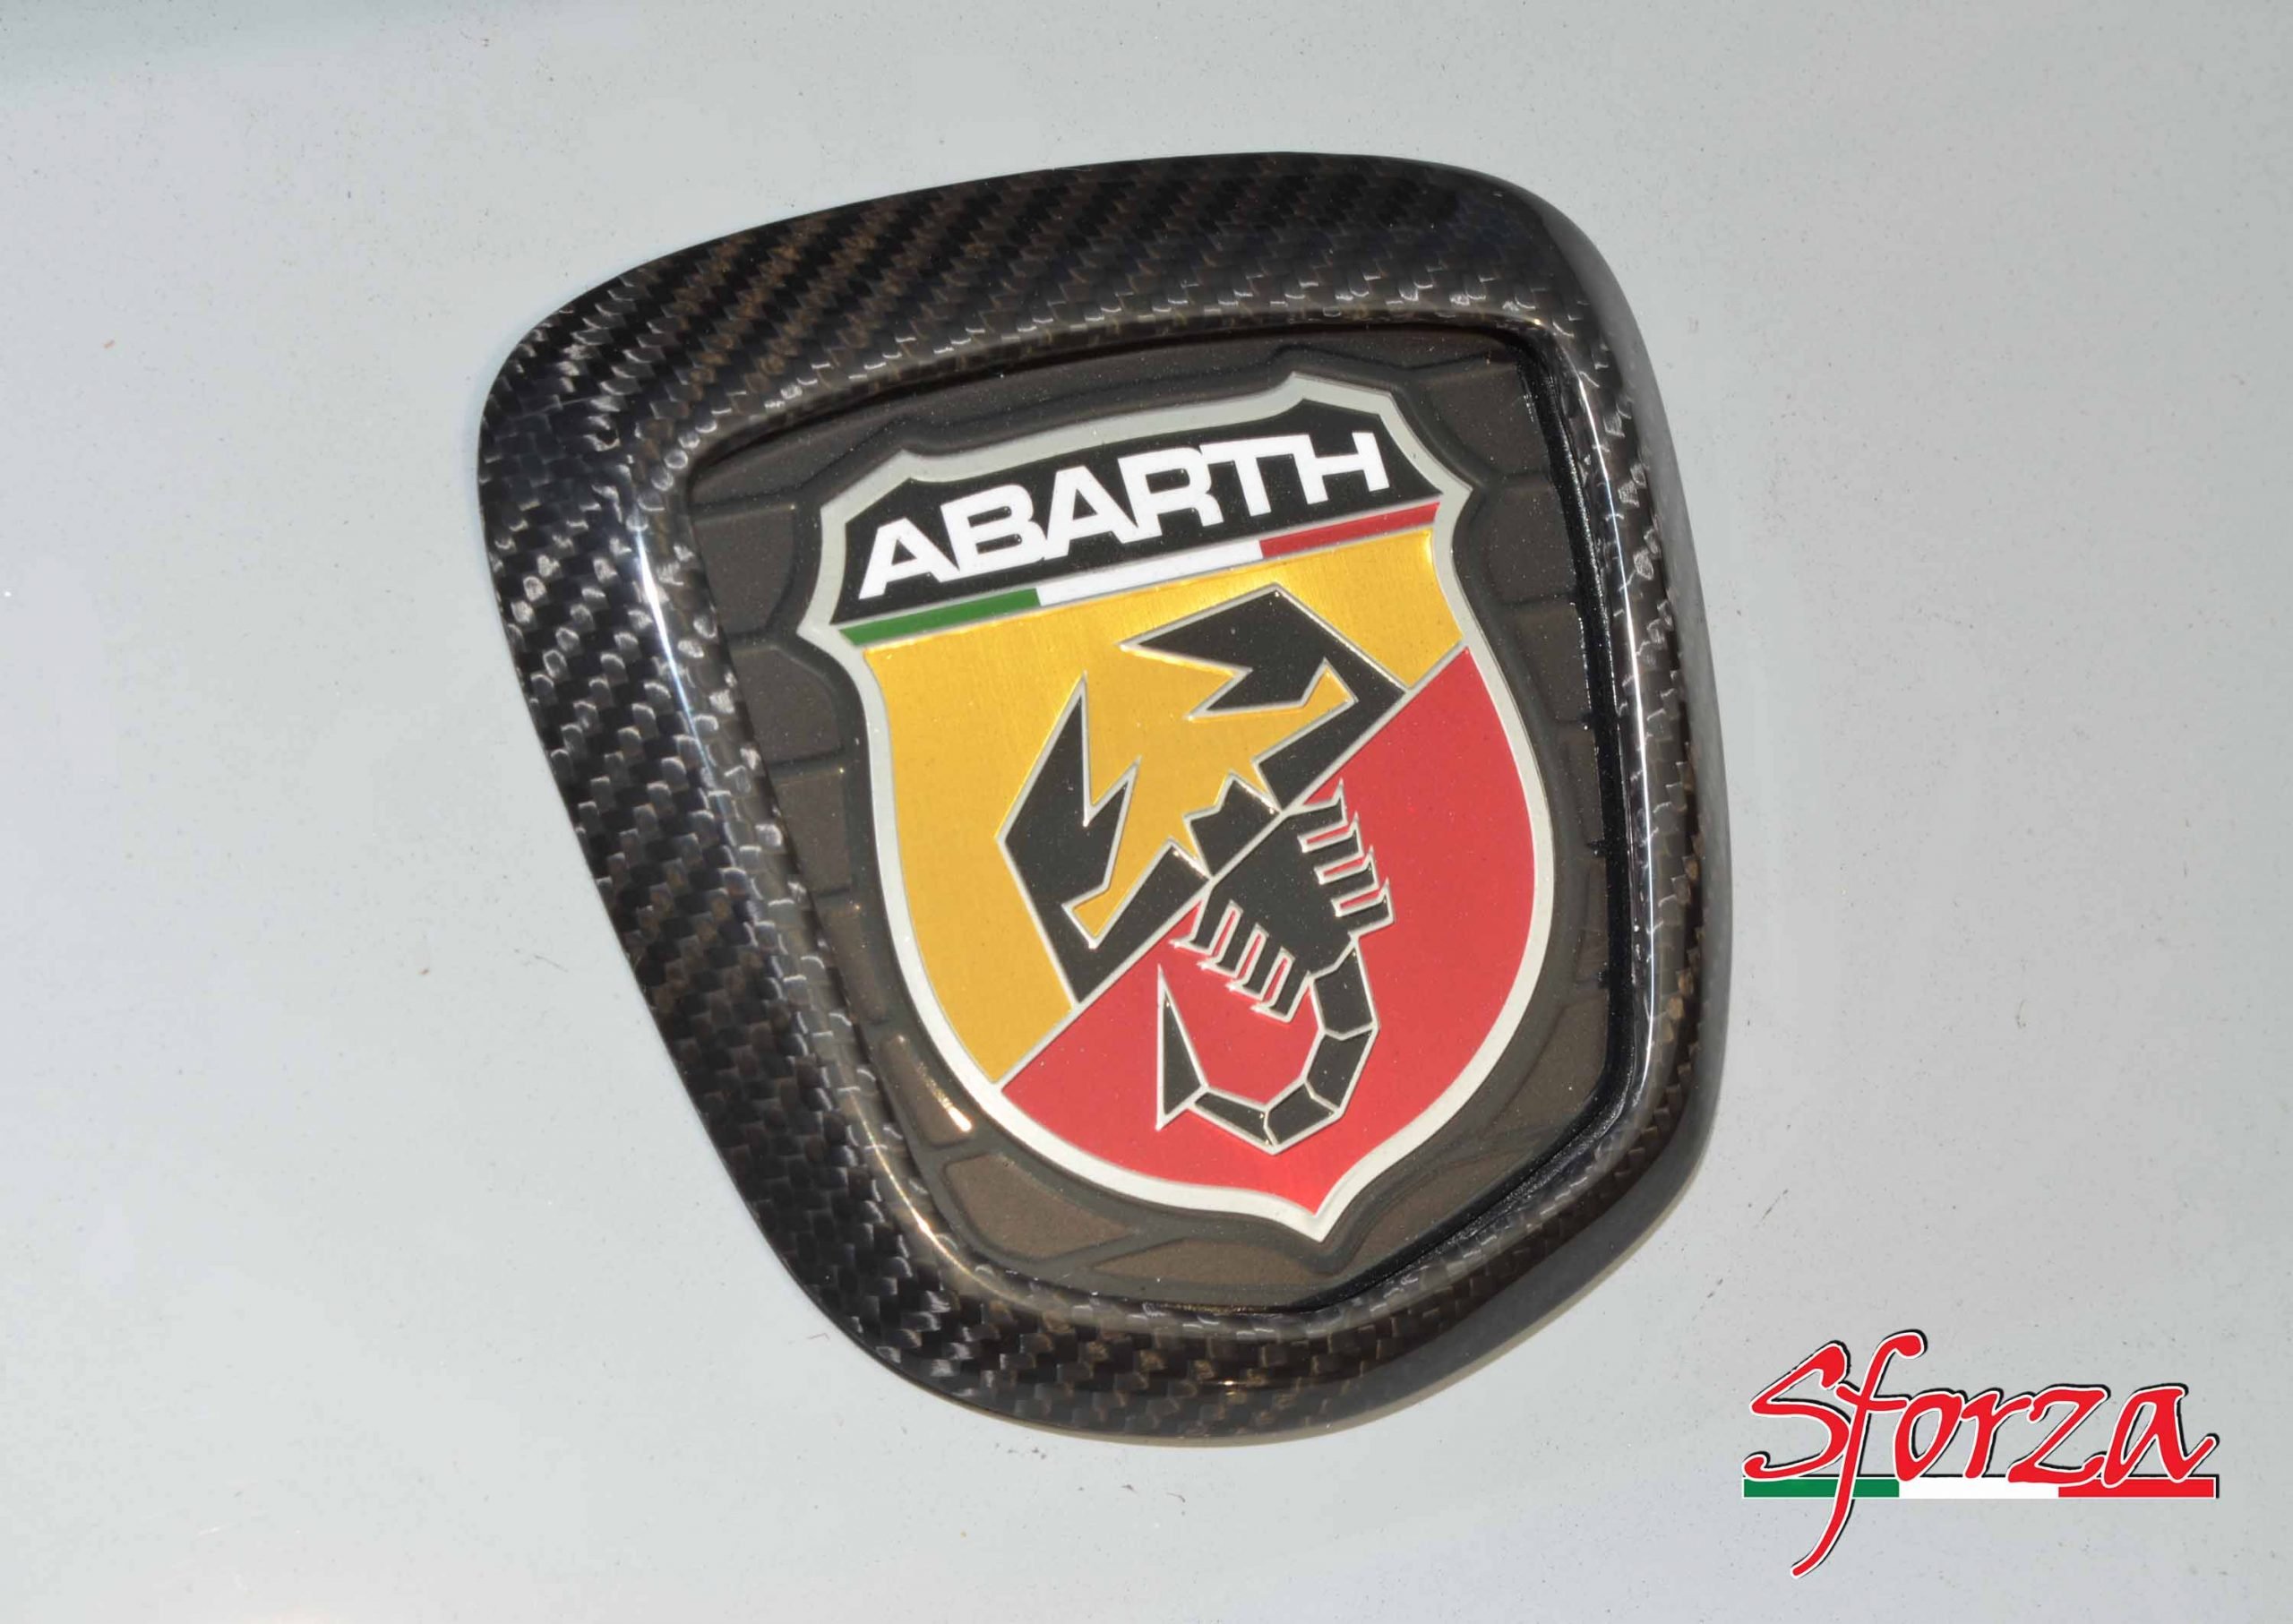 Abarth 500 Carbon rear embem frame